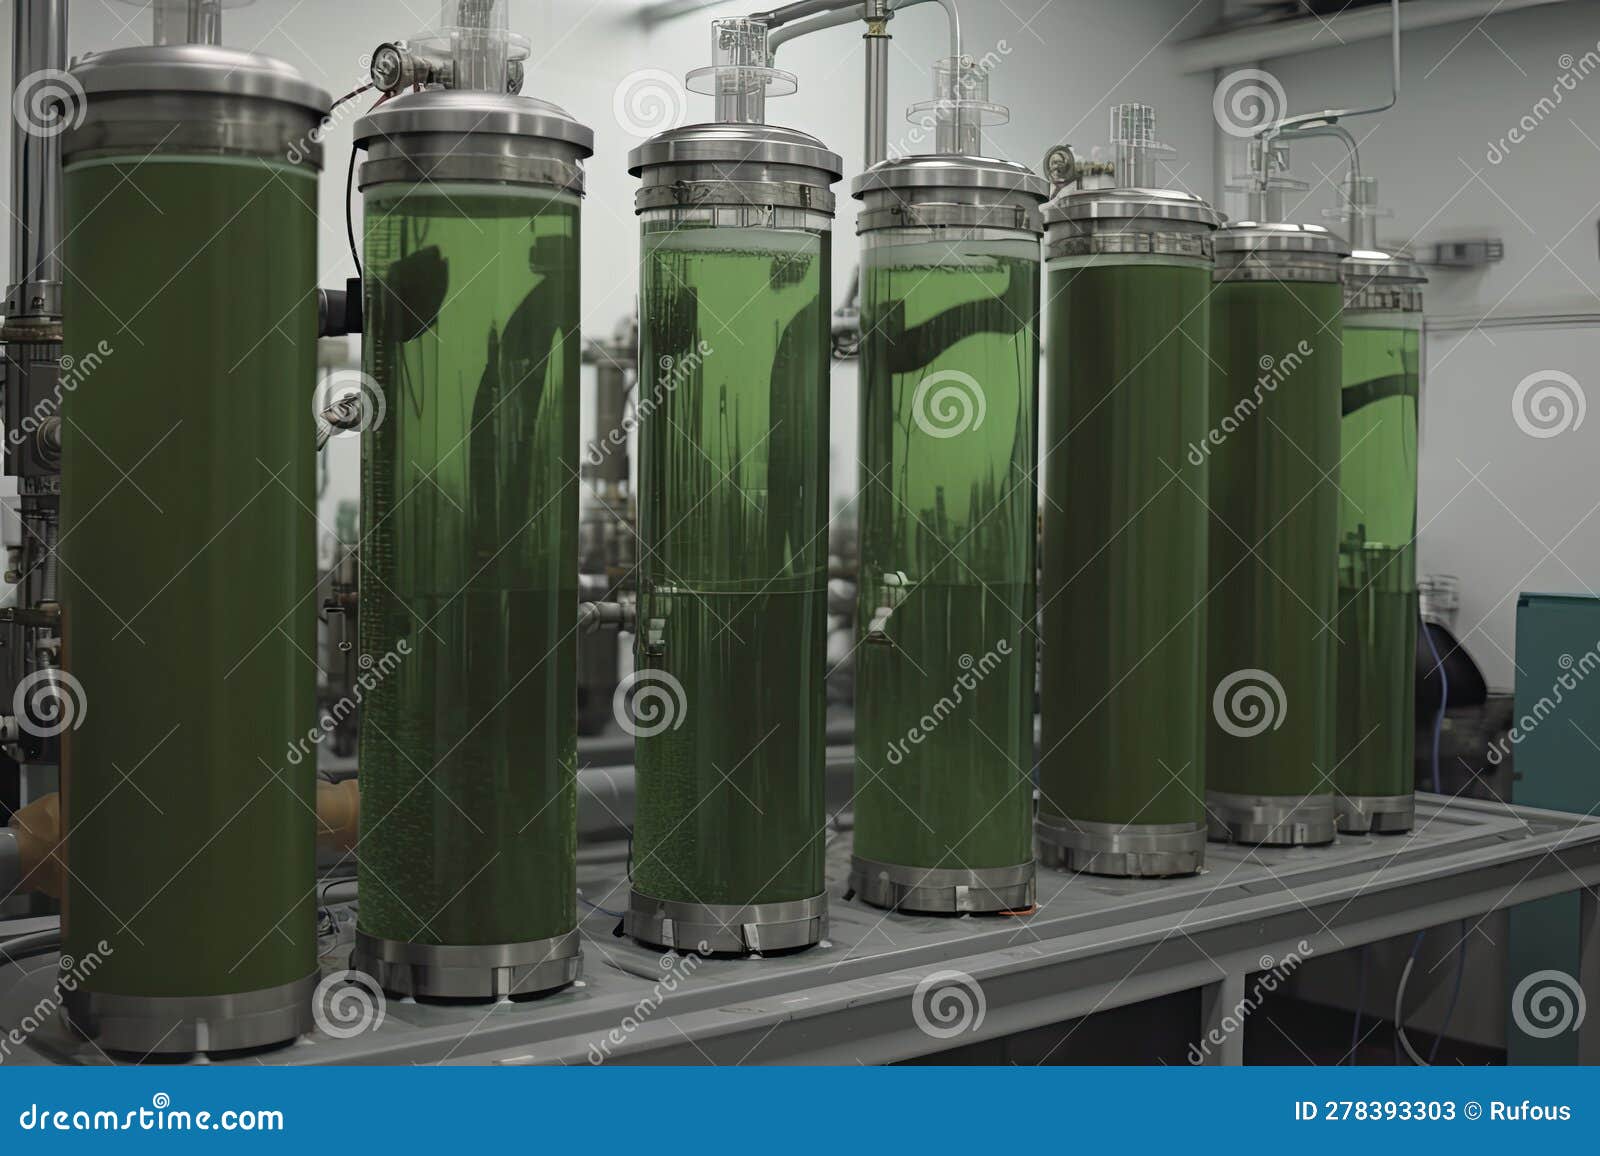 Tubular Algae Bioreactors Fixing CO2 To Produce Biofuel Stock Image ...